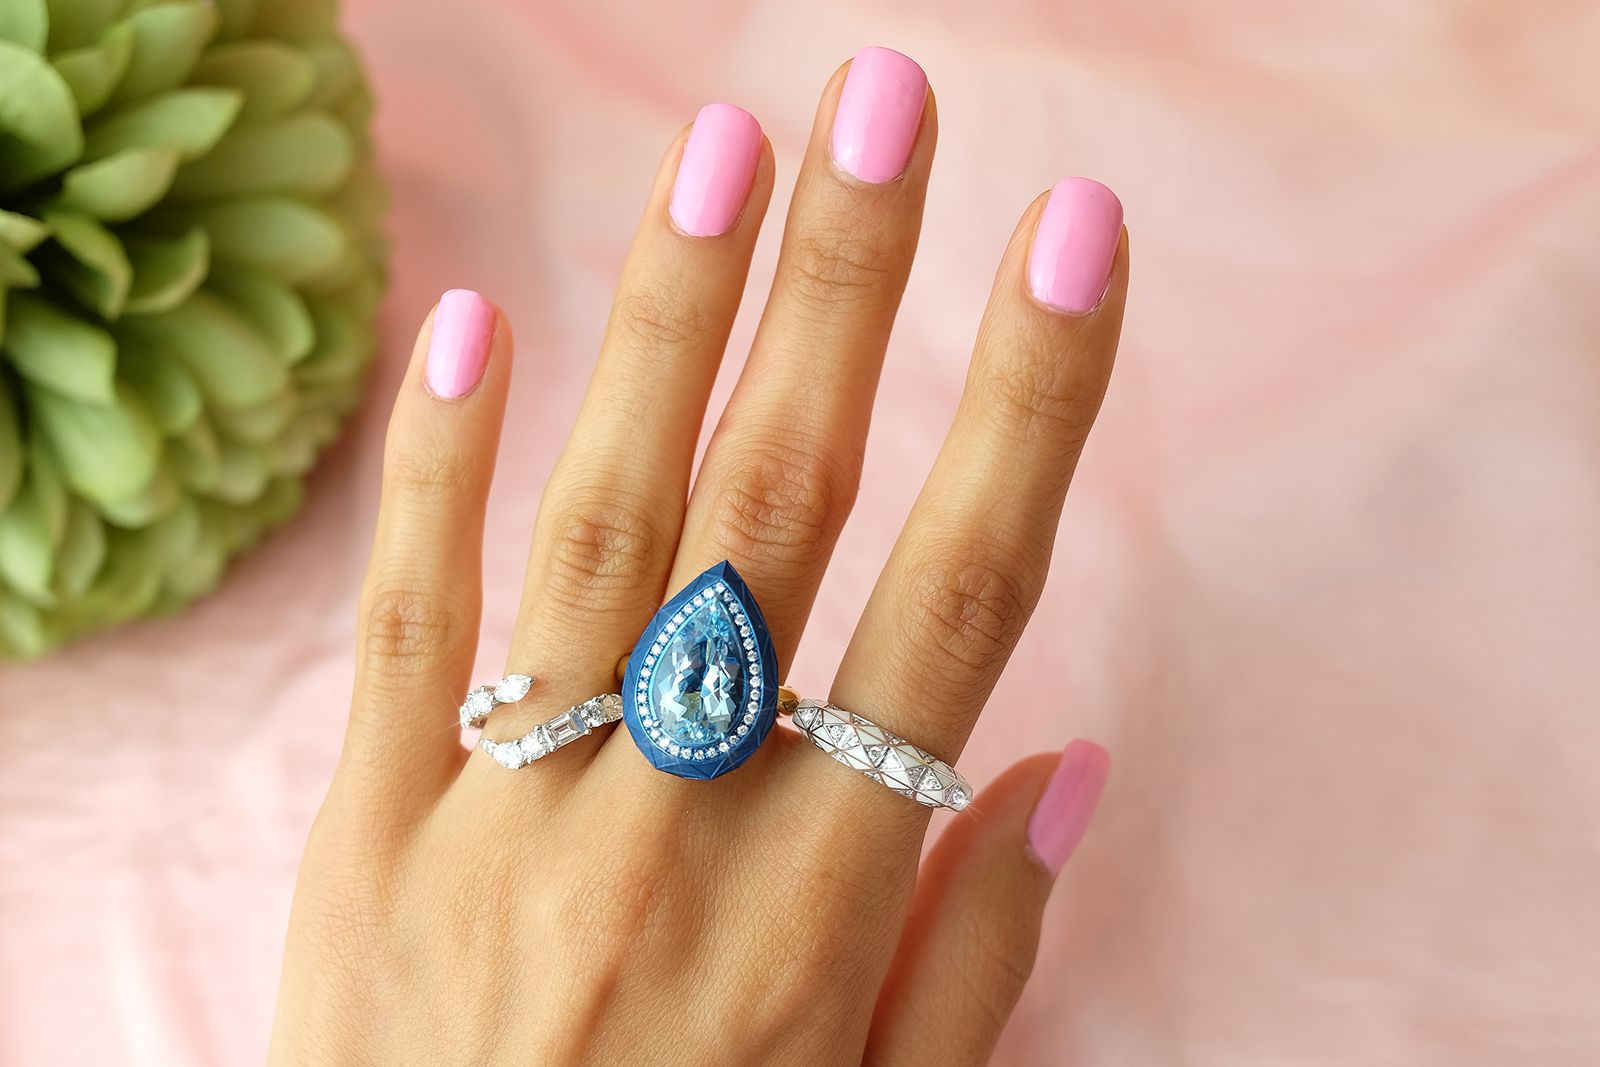 Sarah Ho gold, white gold, aquamarine and diamond Laguna ring and Candy Rock Numerati rings